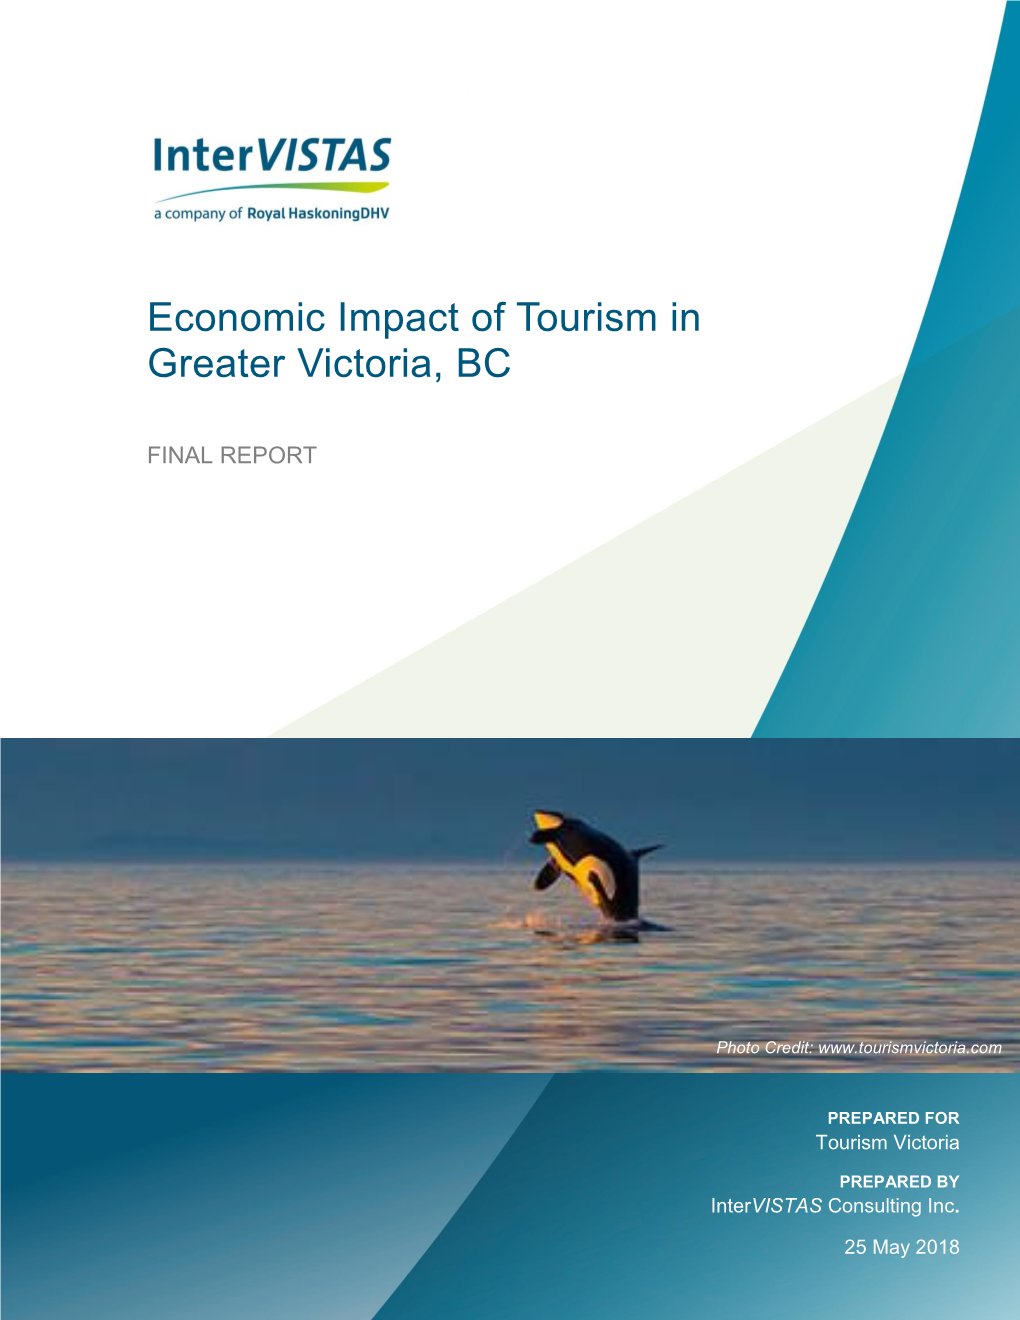 Economic Impact of Tourism in Greater Victoria, BC